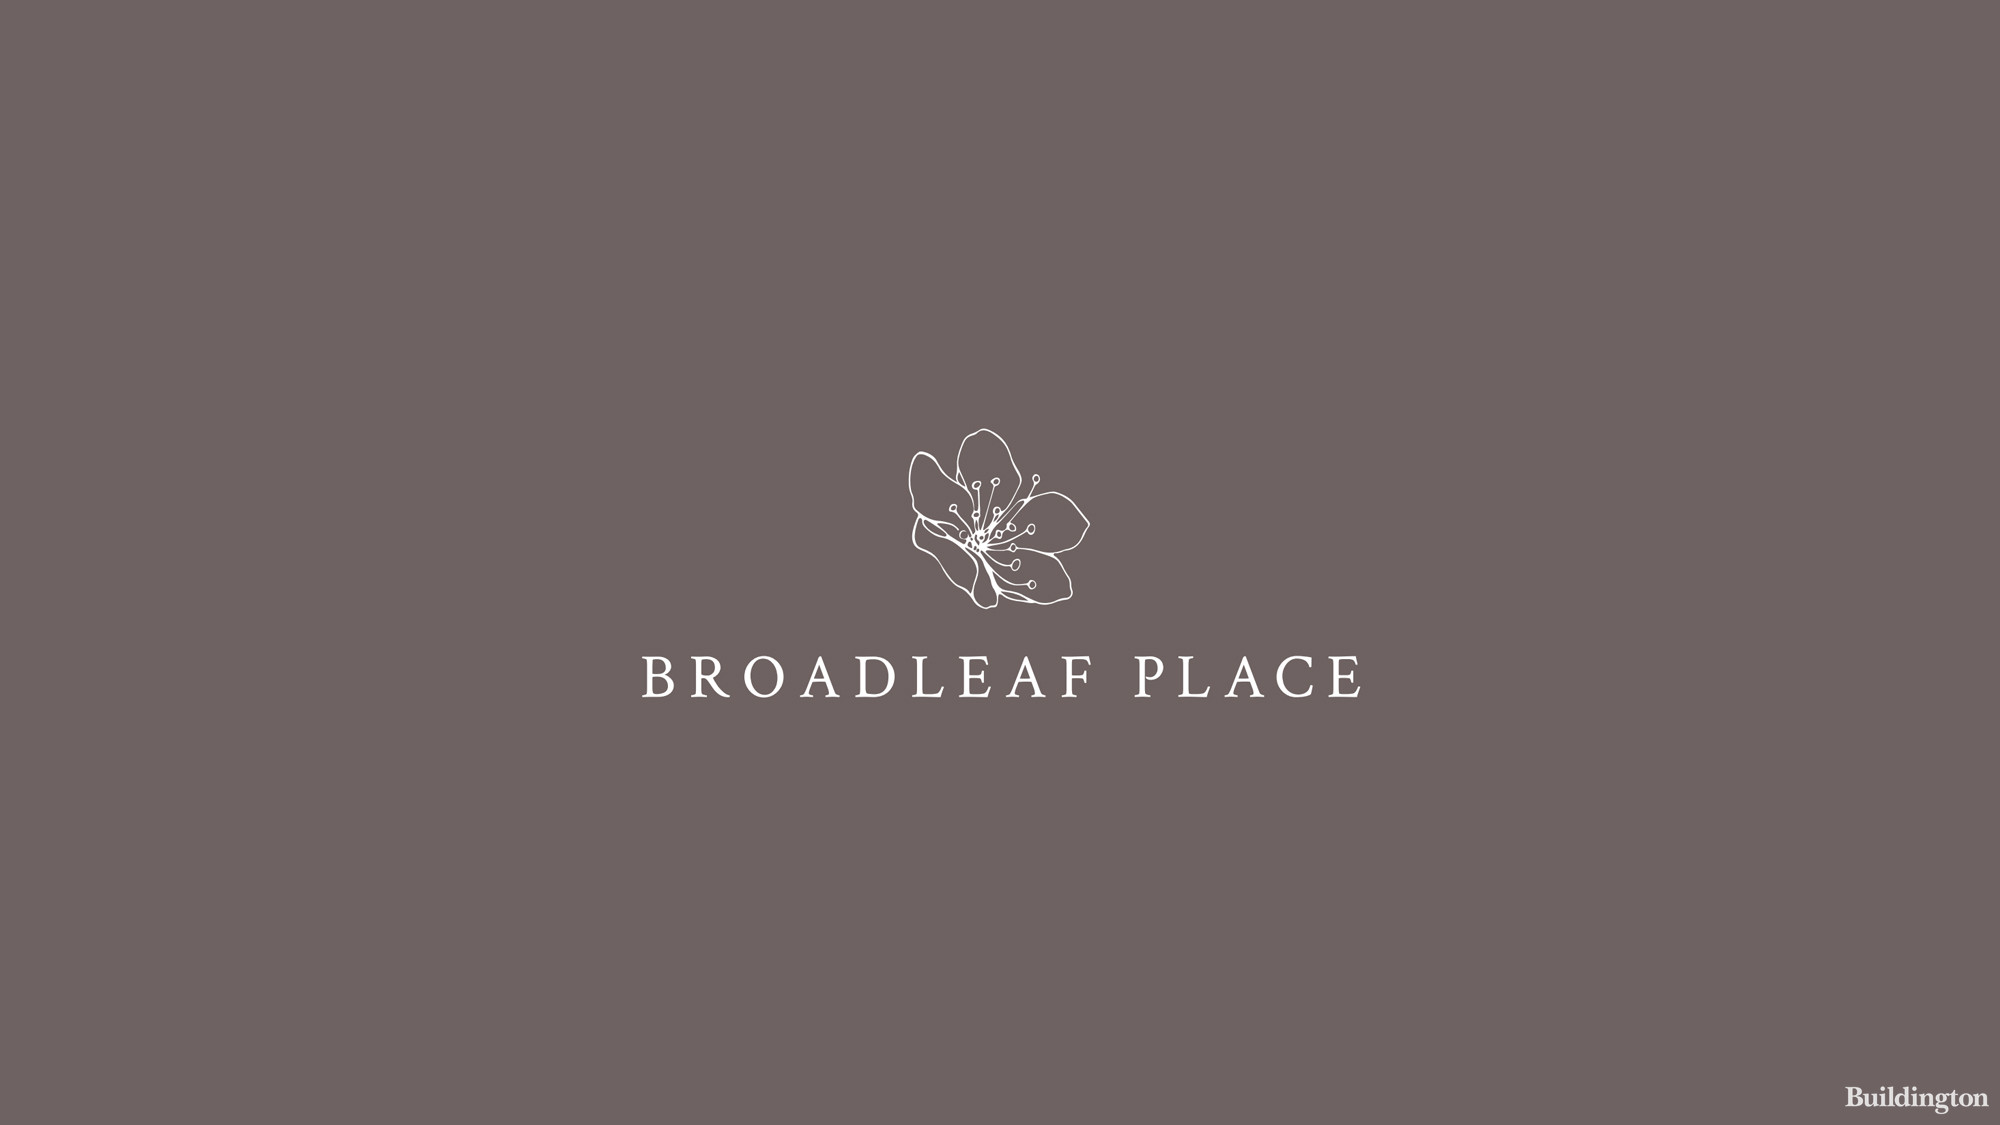 Broadleaf Place development logo